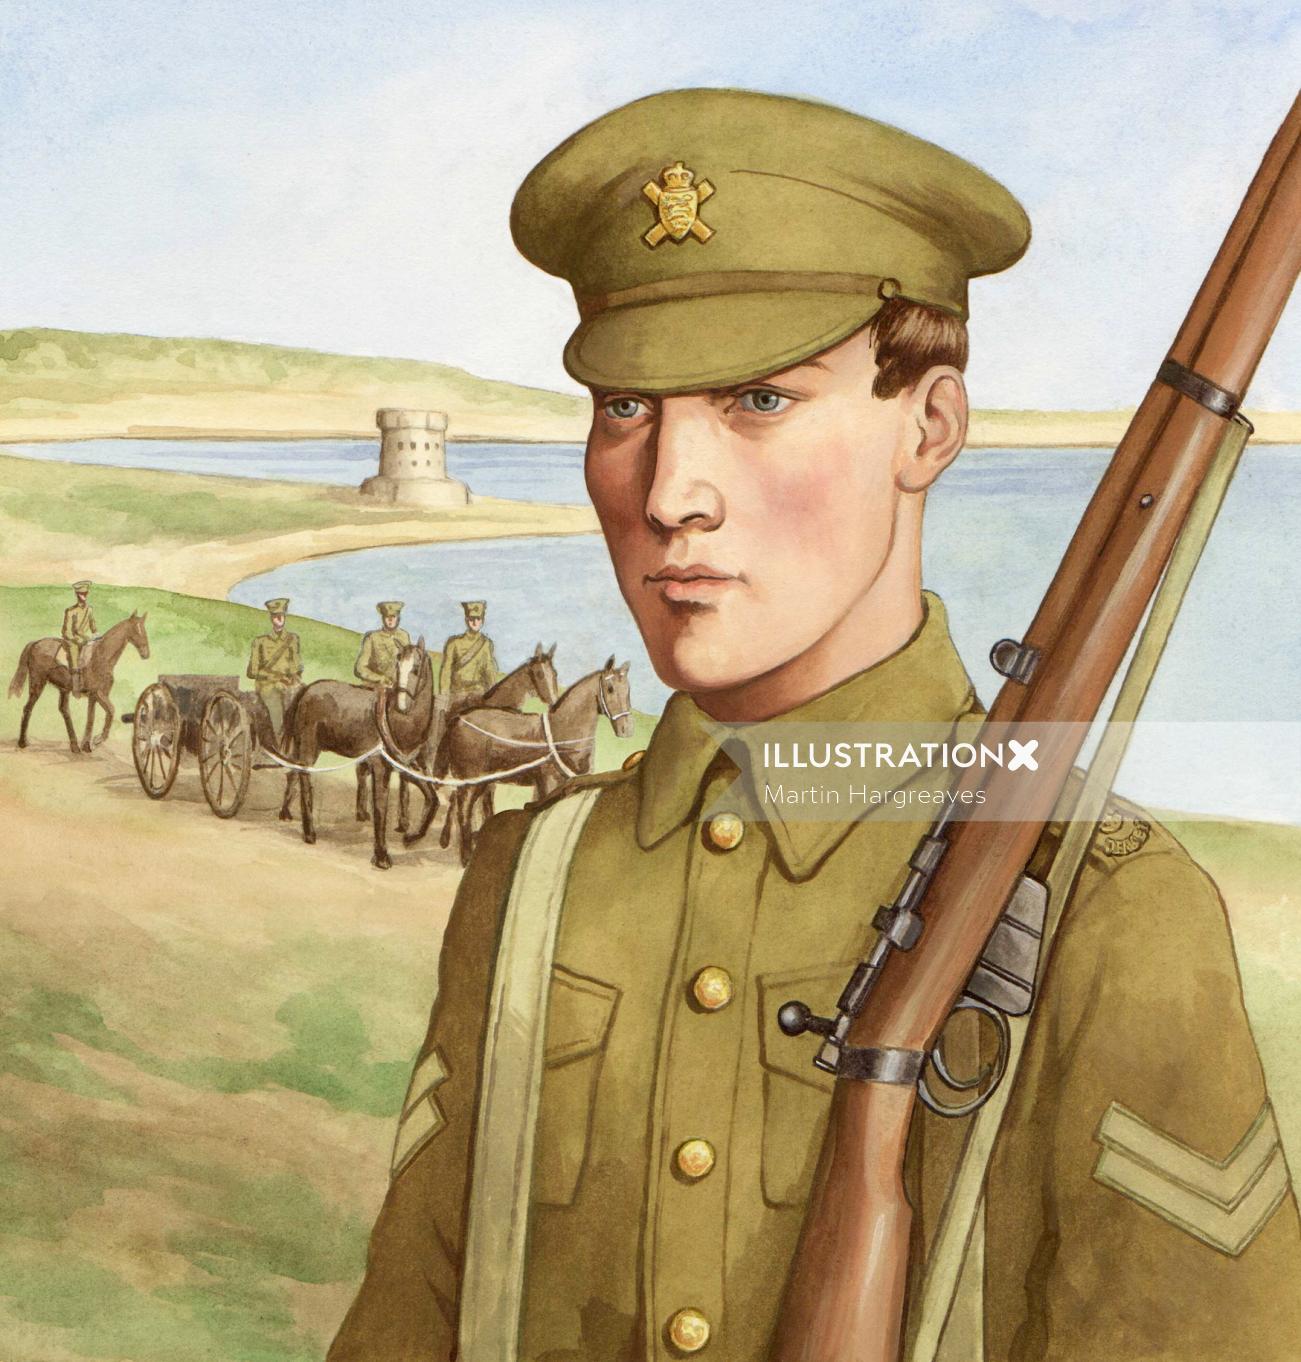 Historical soldier with gun